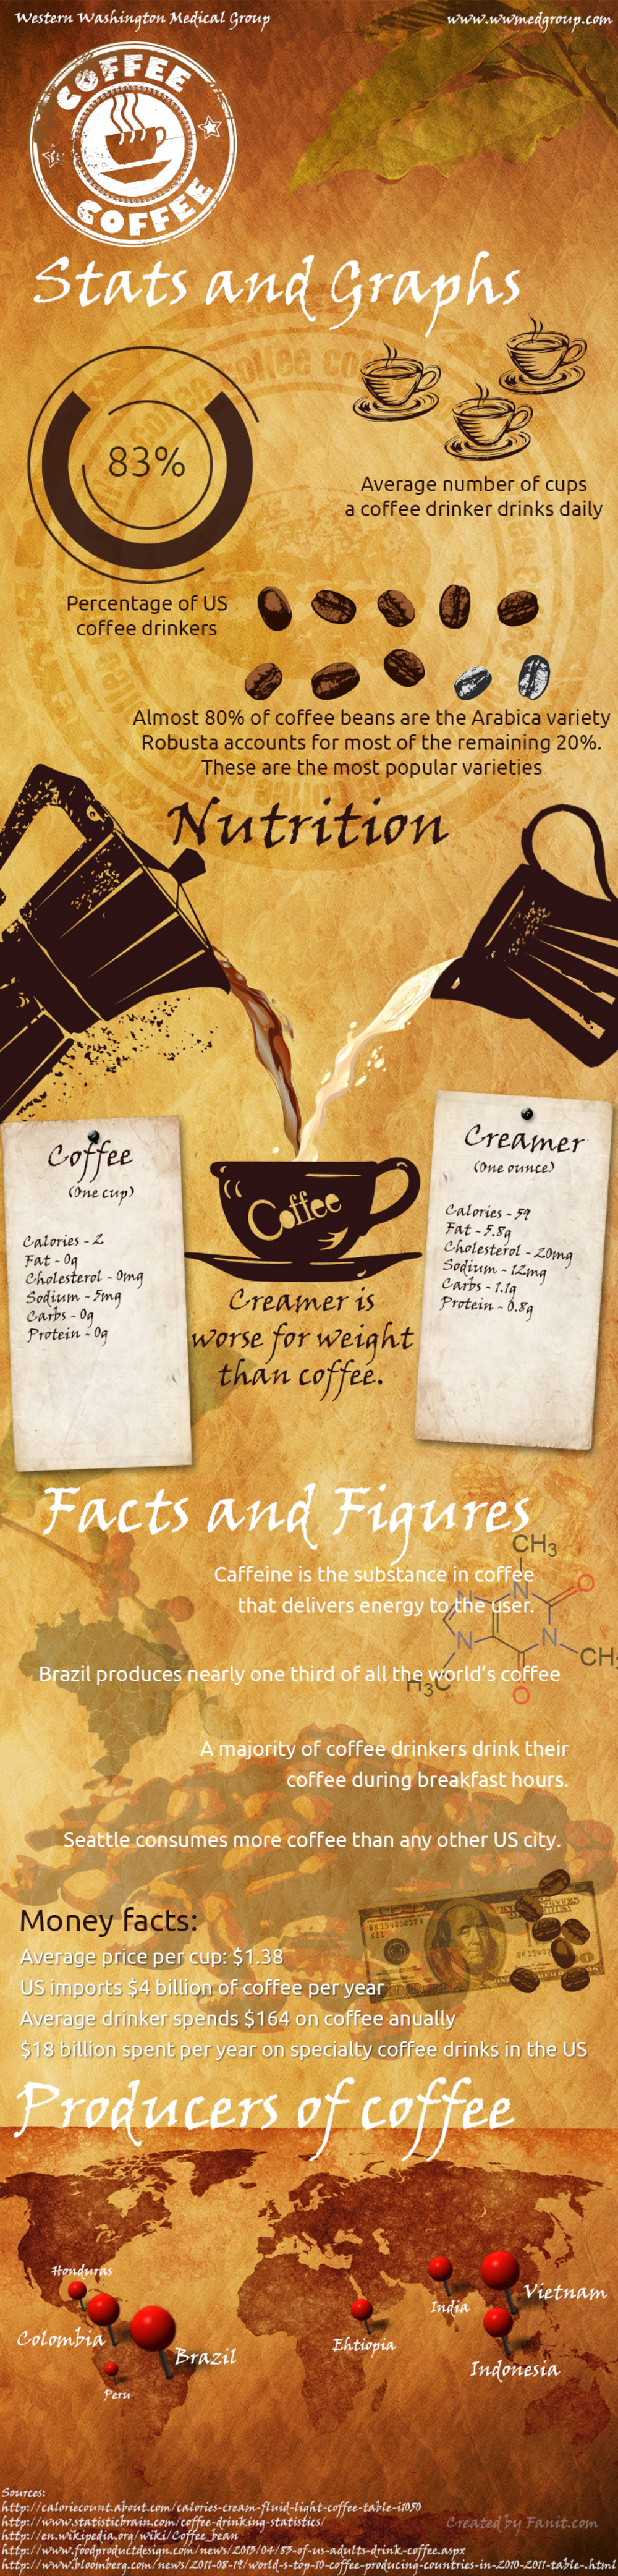 coffee-health-benefits-and-facts_526eb5464e04f_w1500